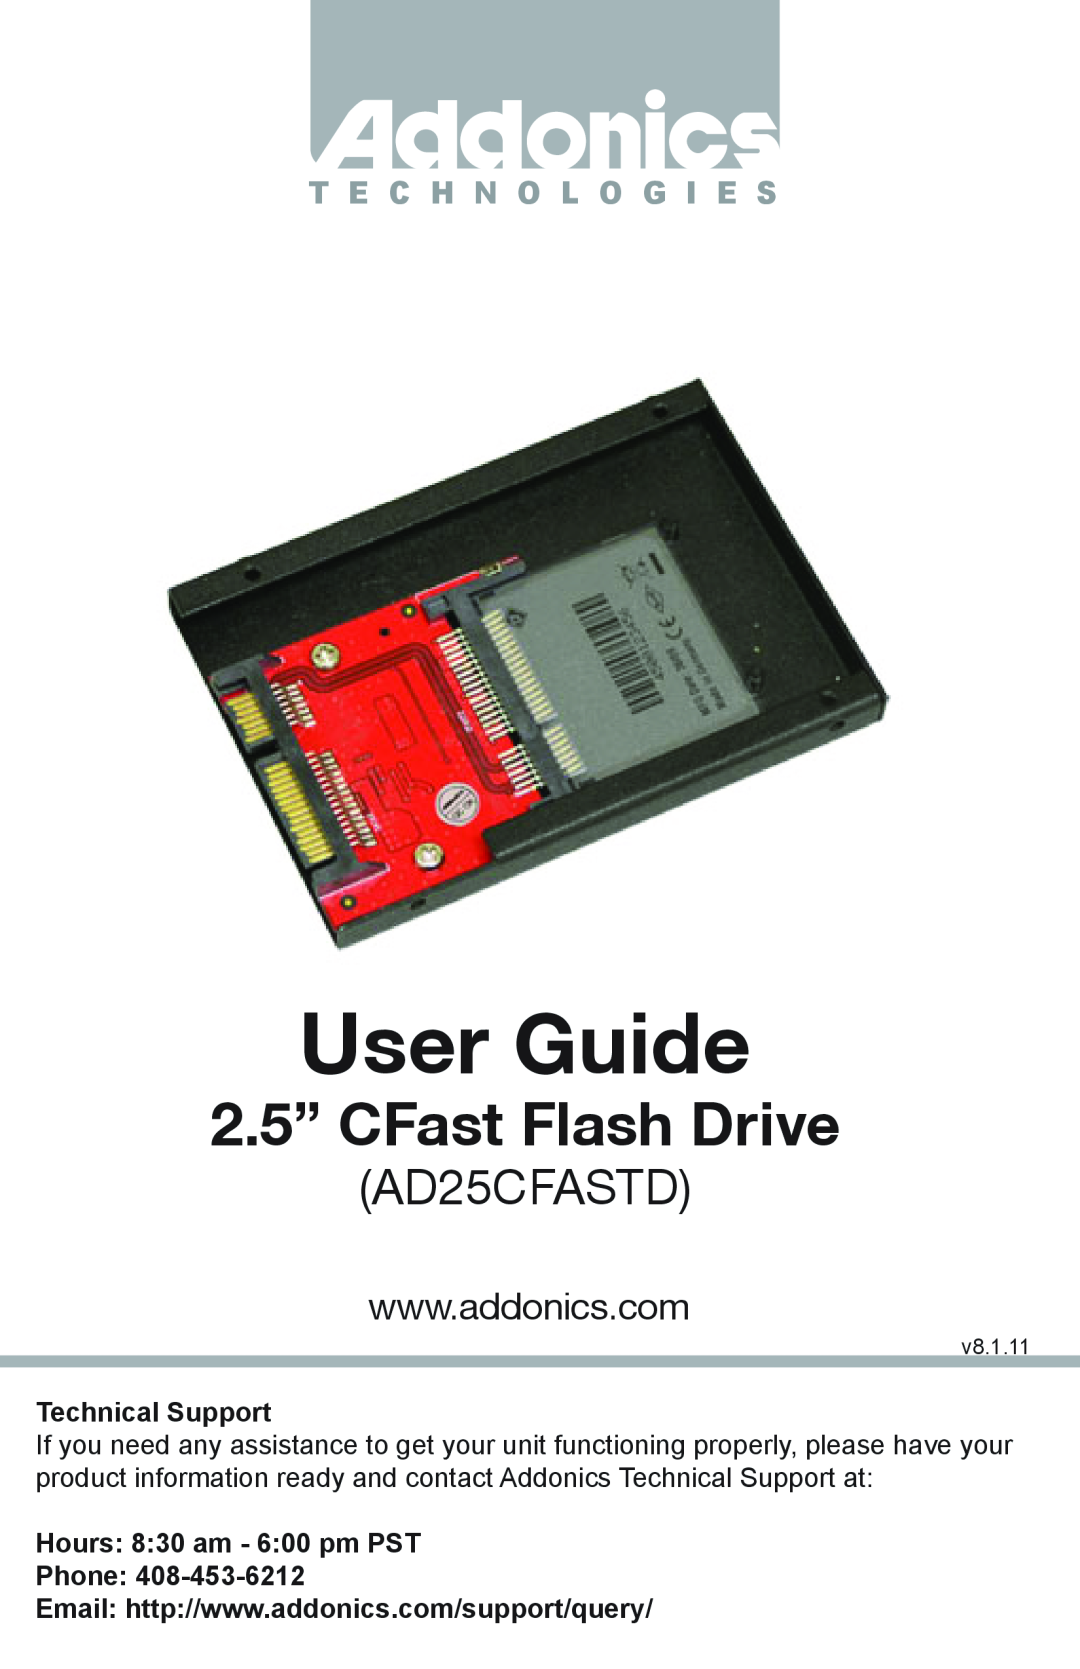 Addonics Technologies AD25CFASTD manual User Guide, 2.5” CFast Flash Drive, T E C H N O L O G I E S, Technical Support 